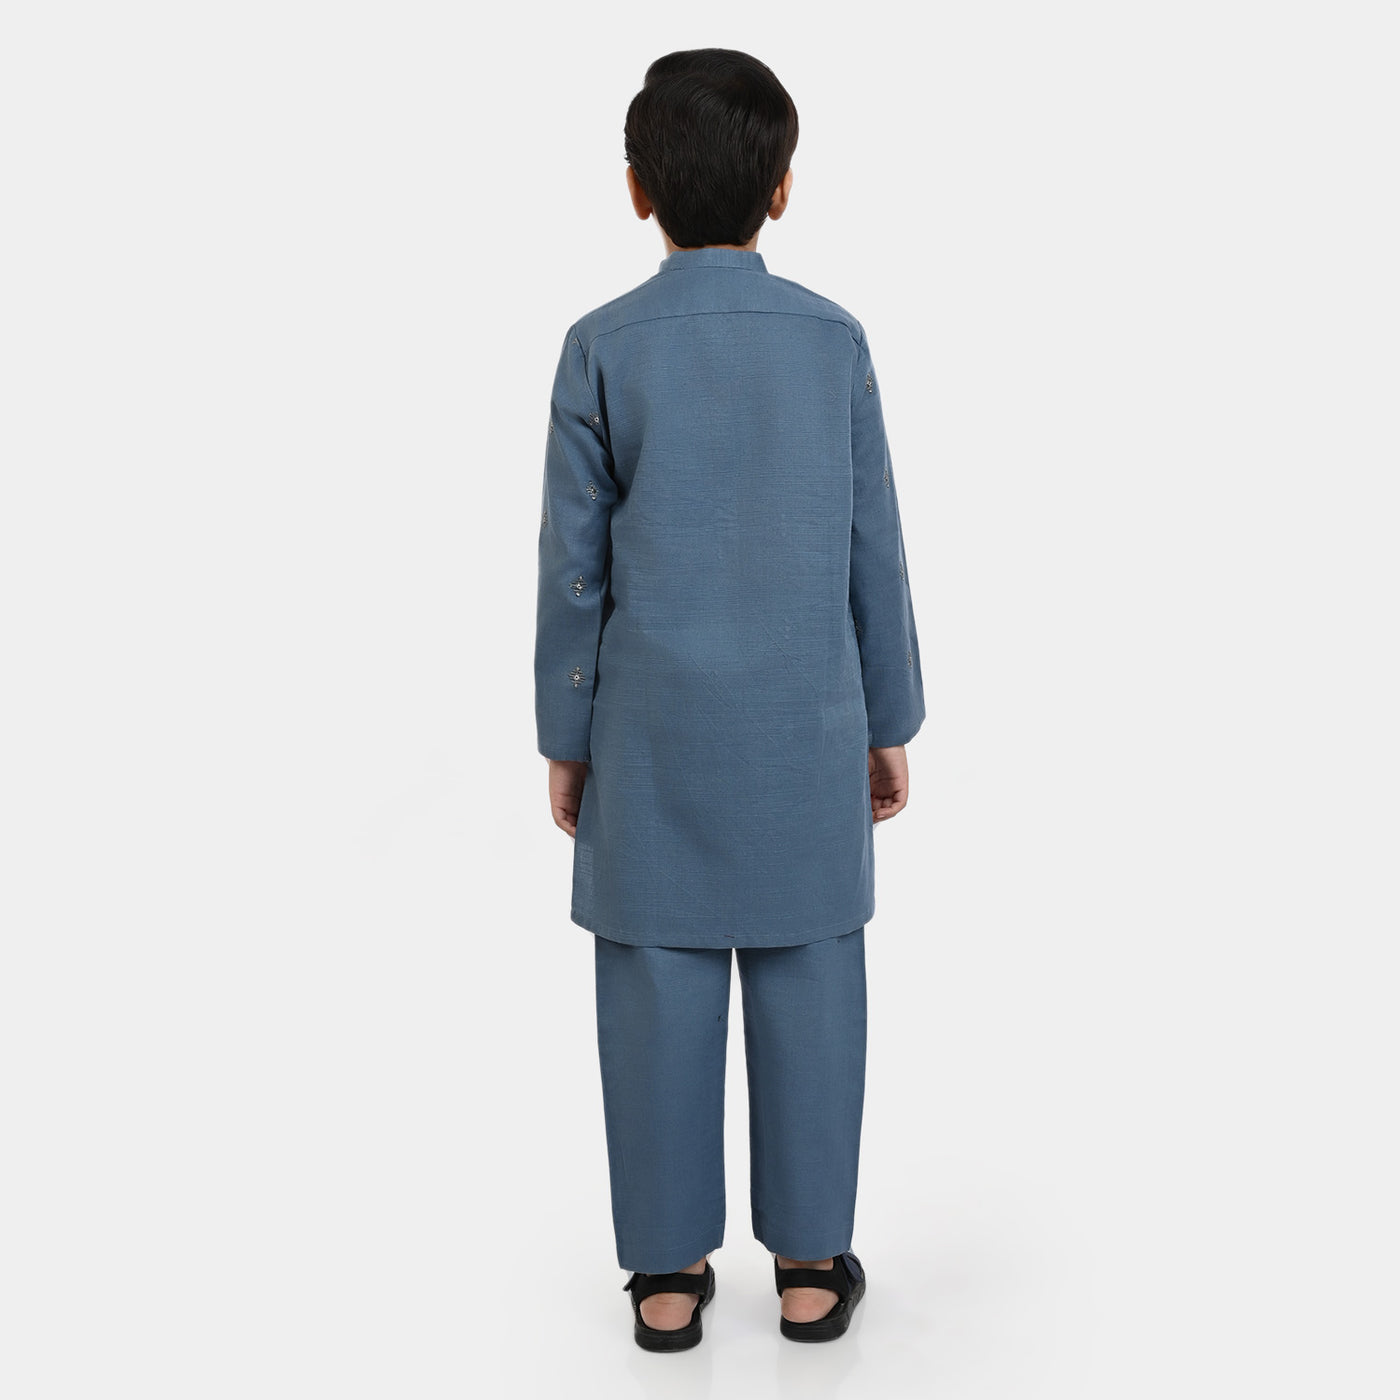 Boys khaddar 2 piece suit Embroidered -P/Blue